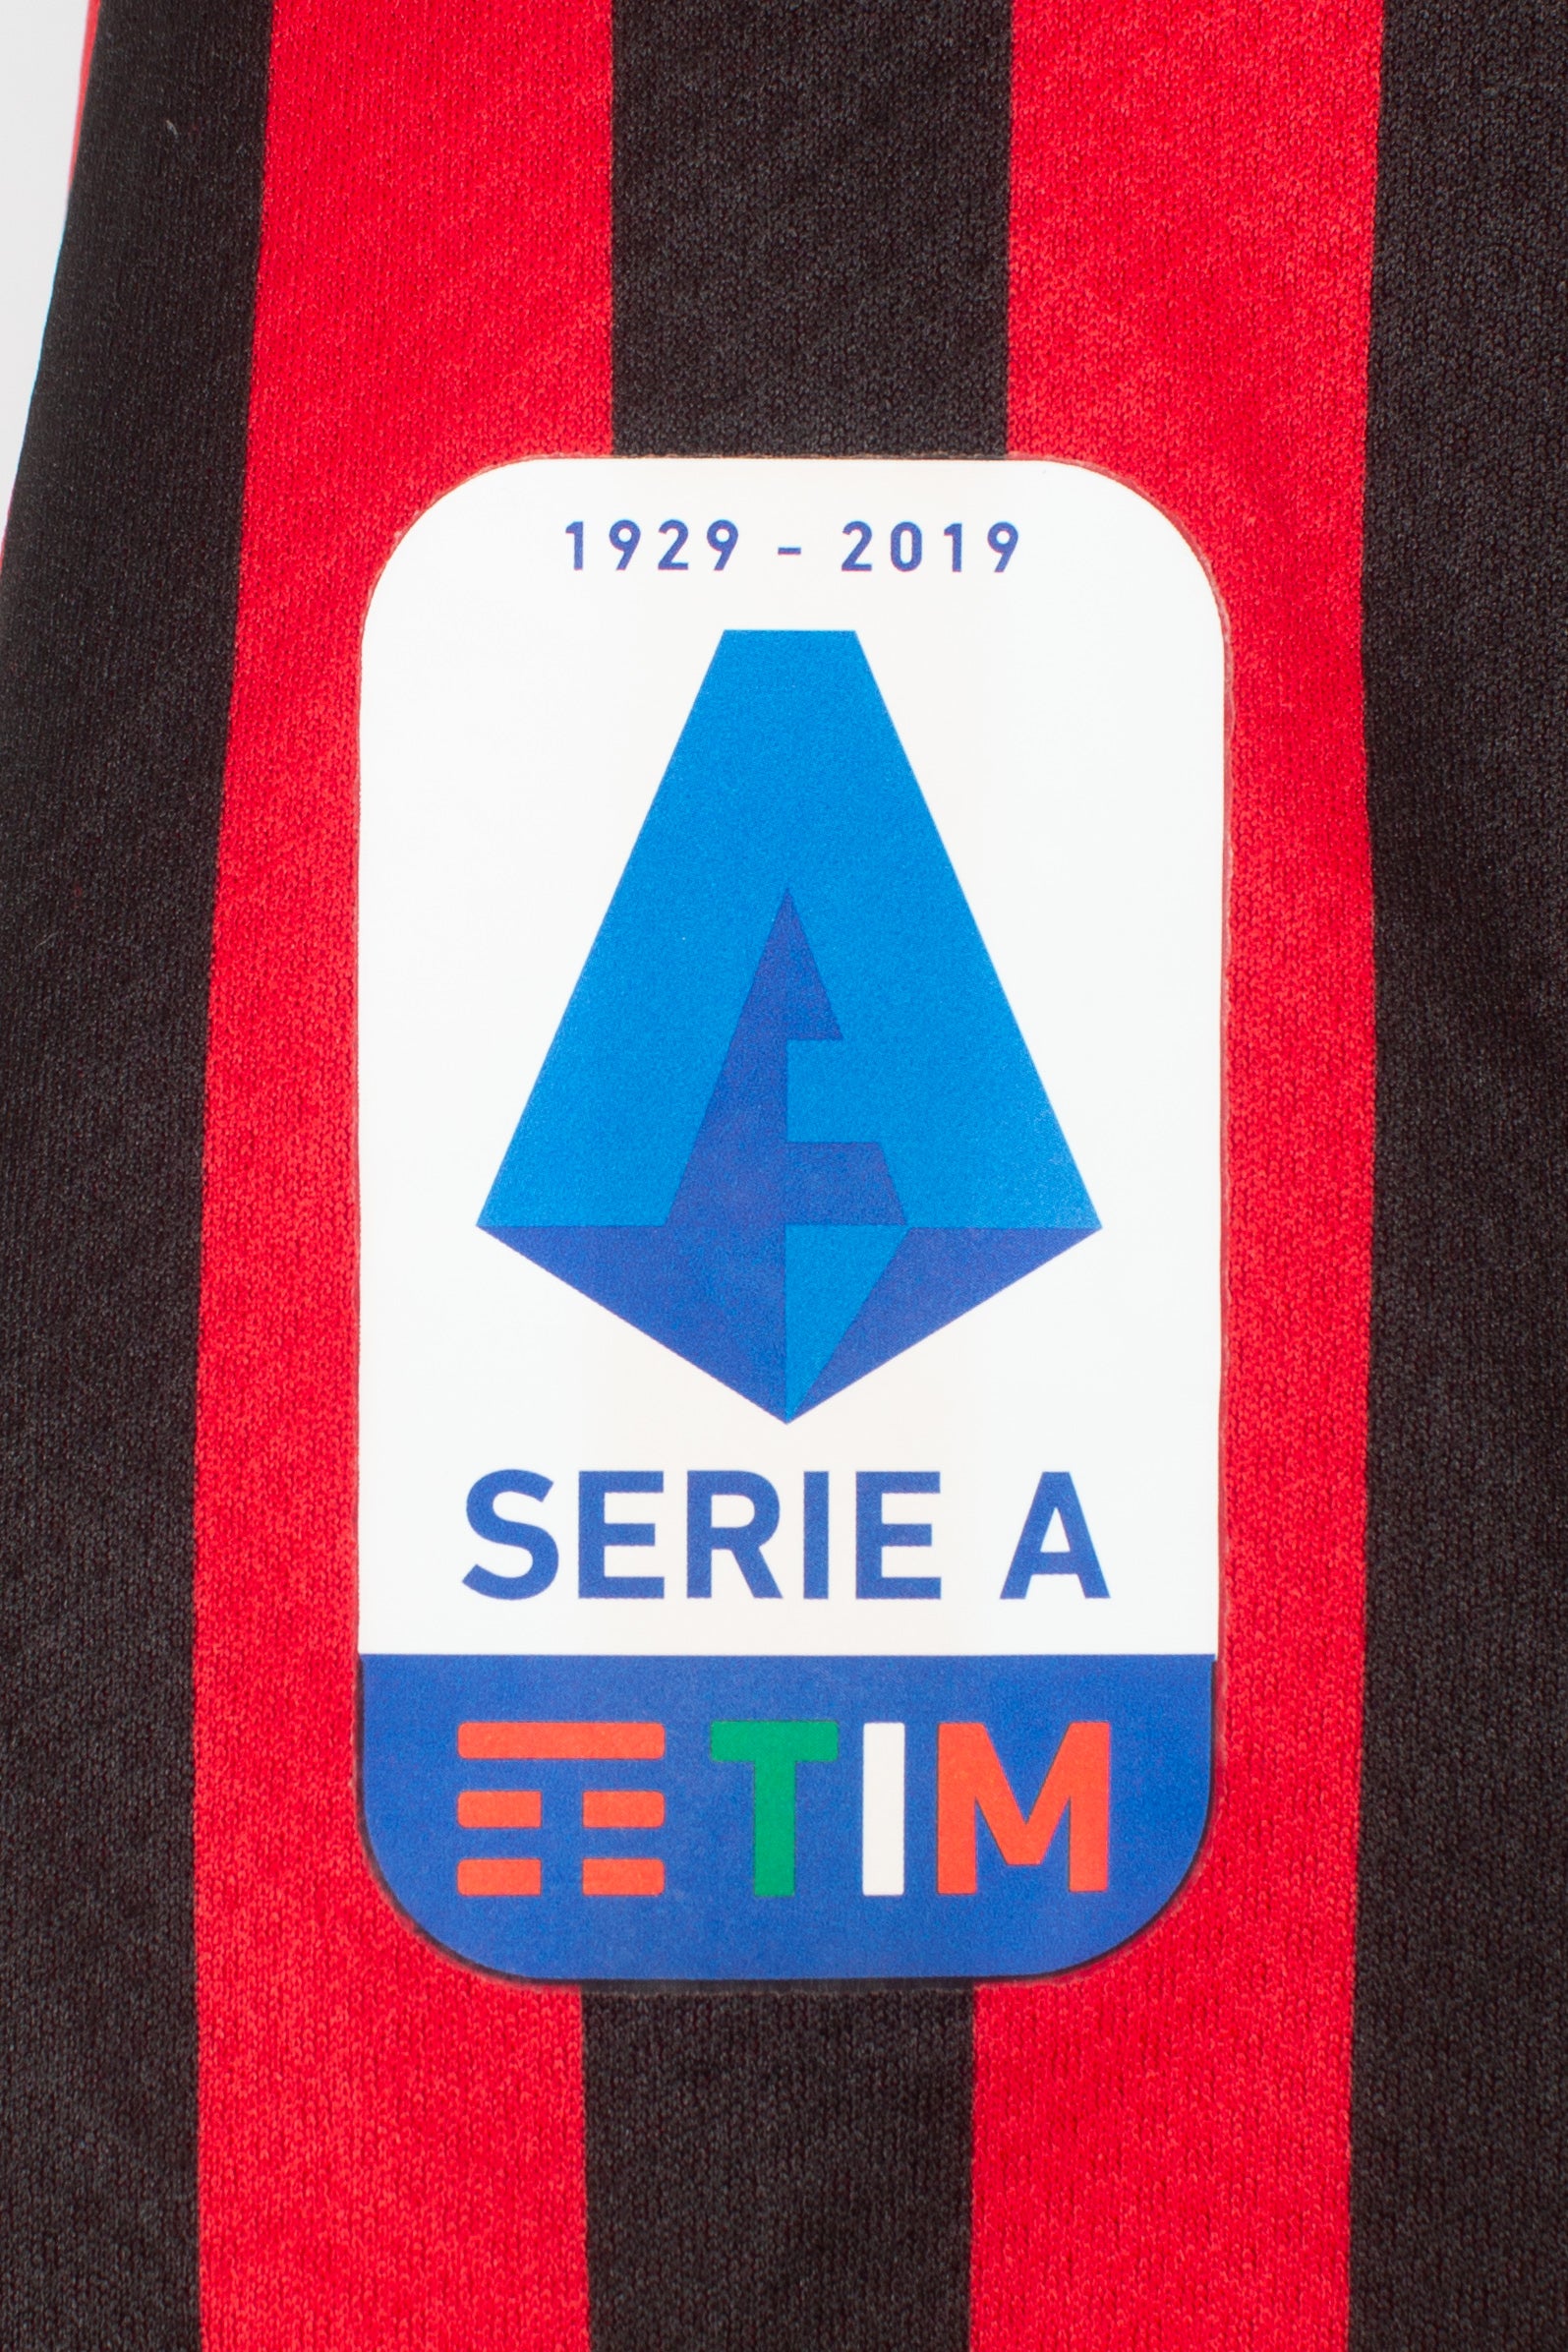 AC Milan 2019/20 Home Shirt (Ibrahimovic #21) (XXL)